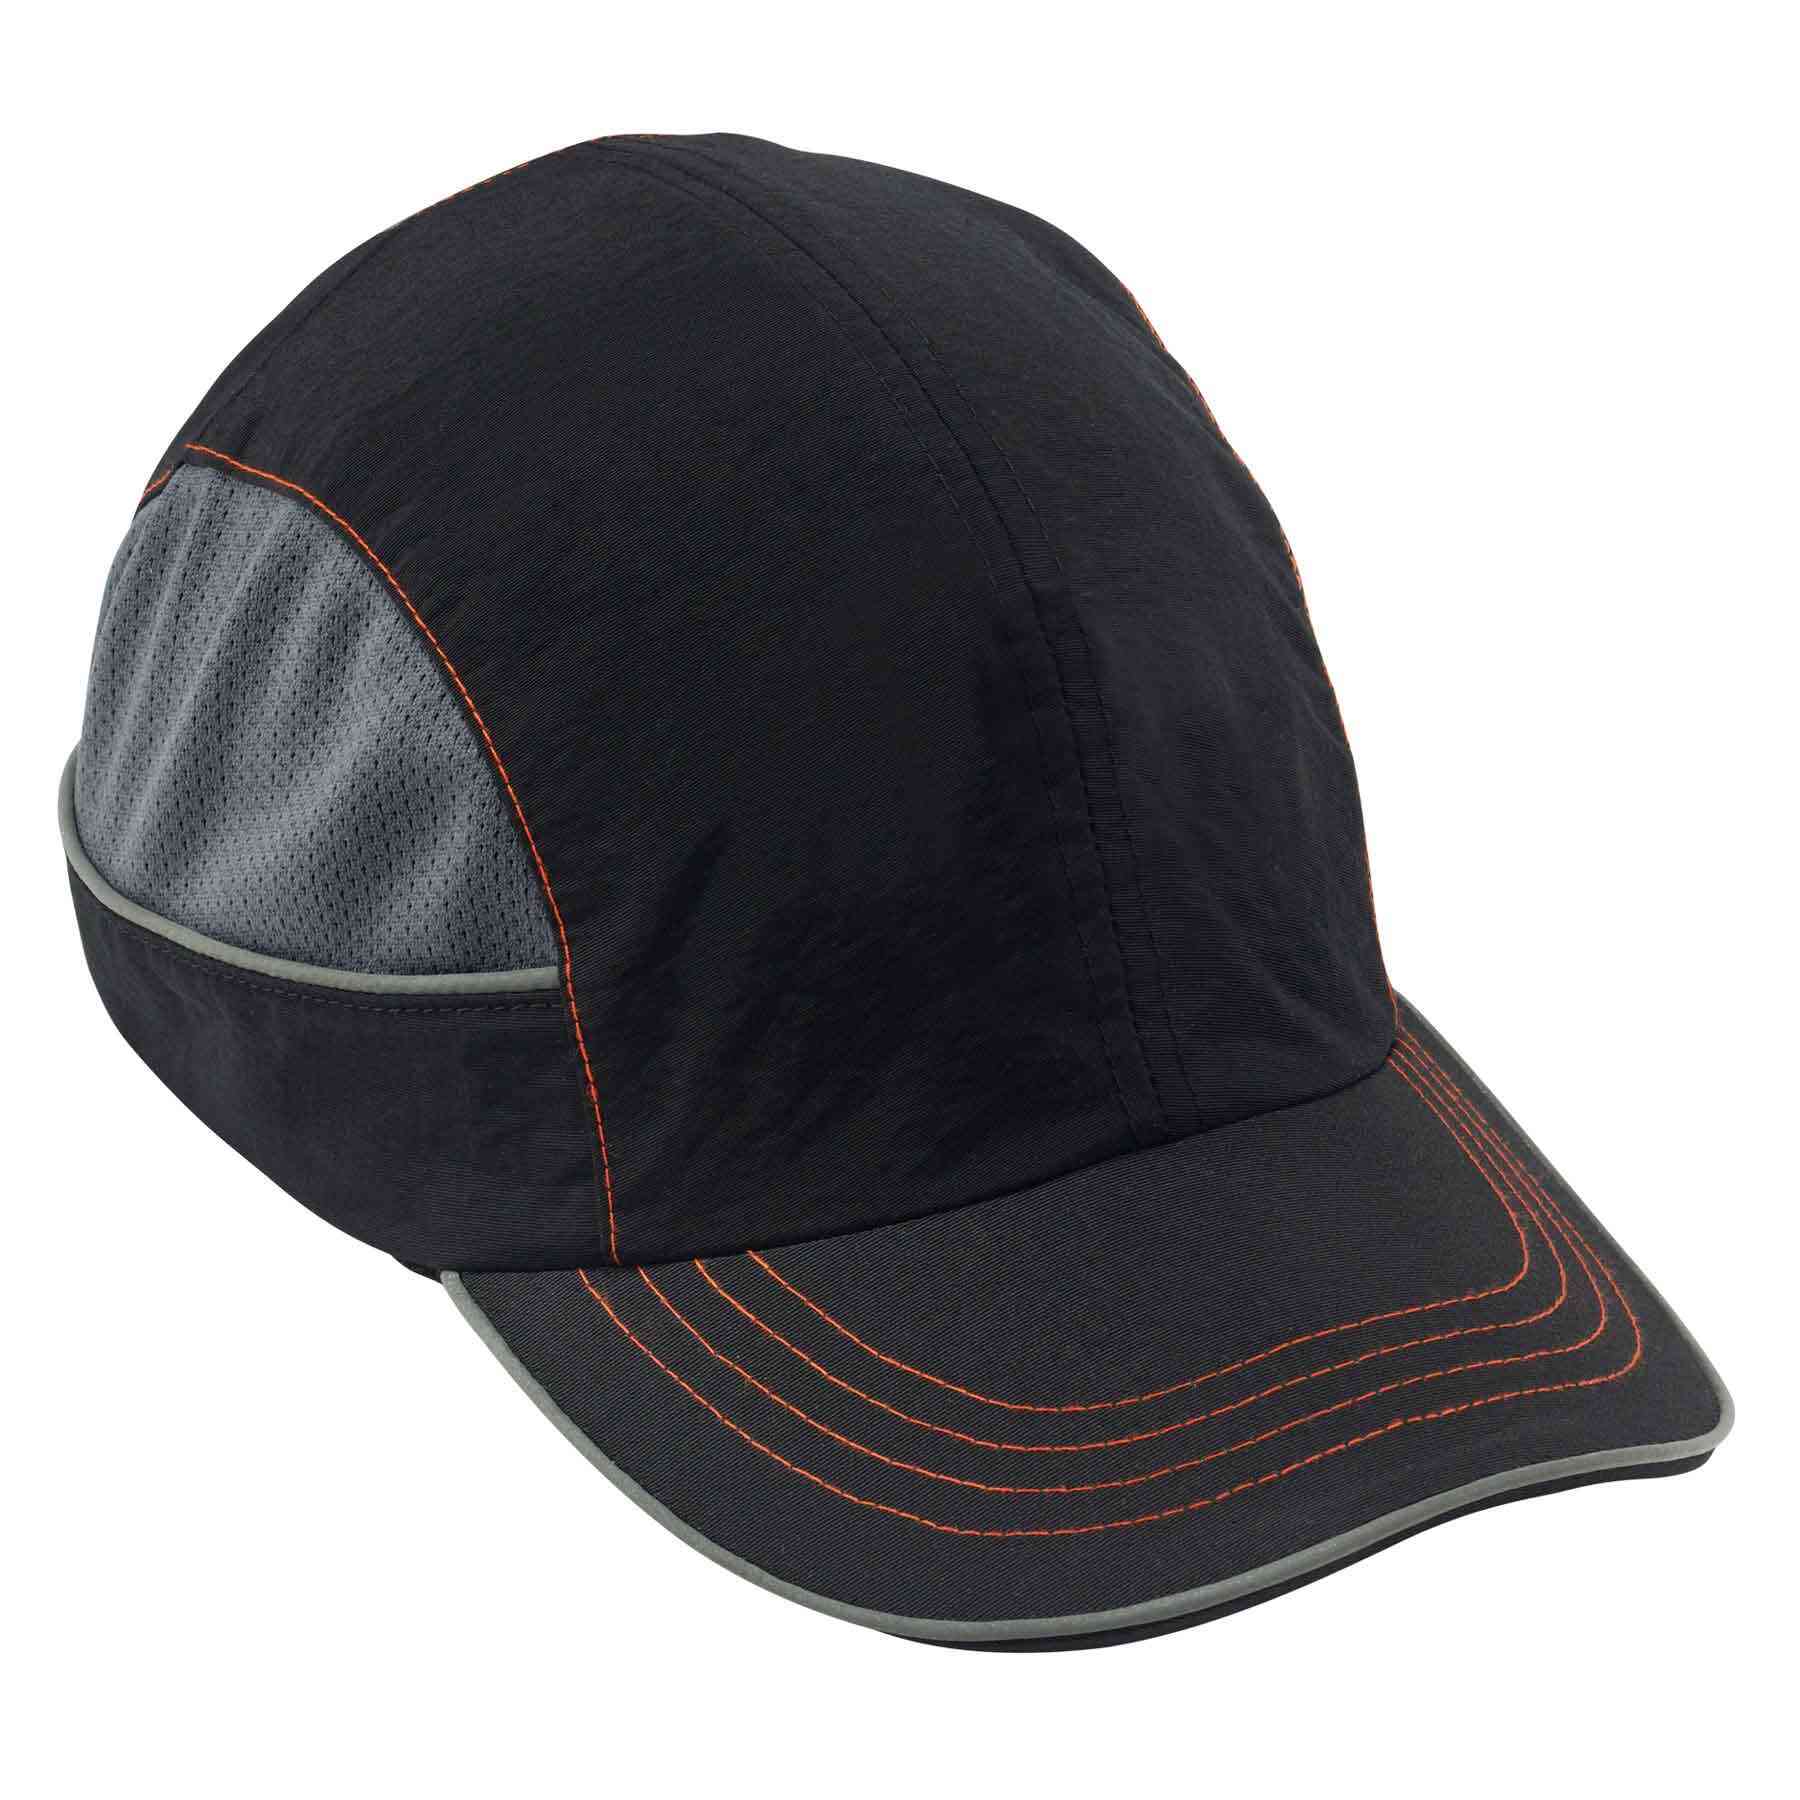 XL Bump Cap Hat - Baseball/Bump Caps